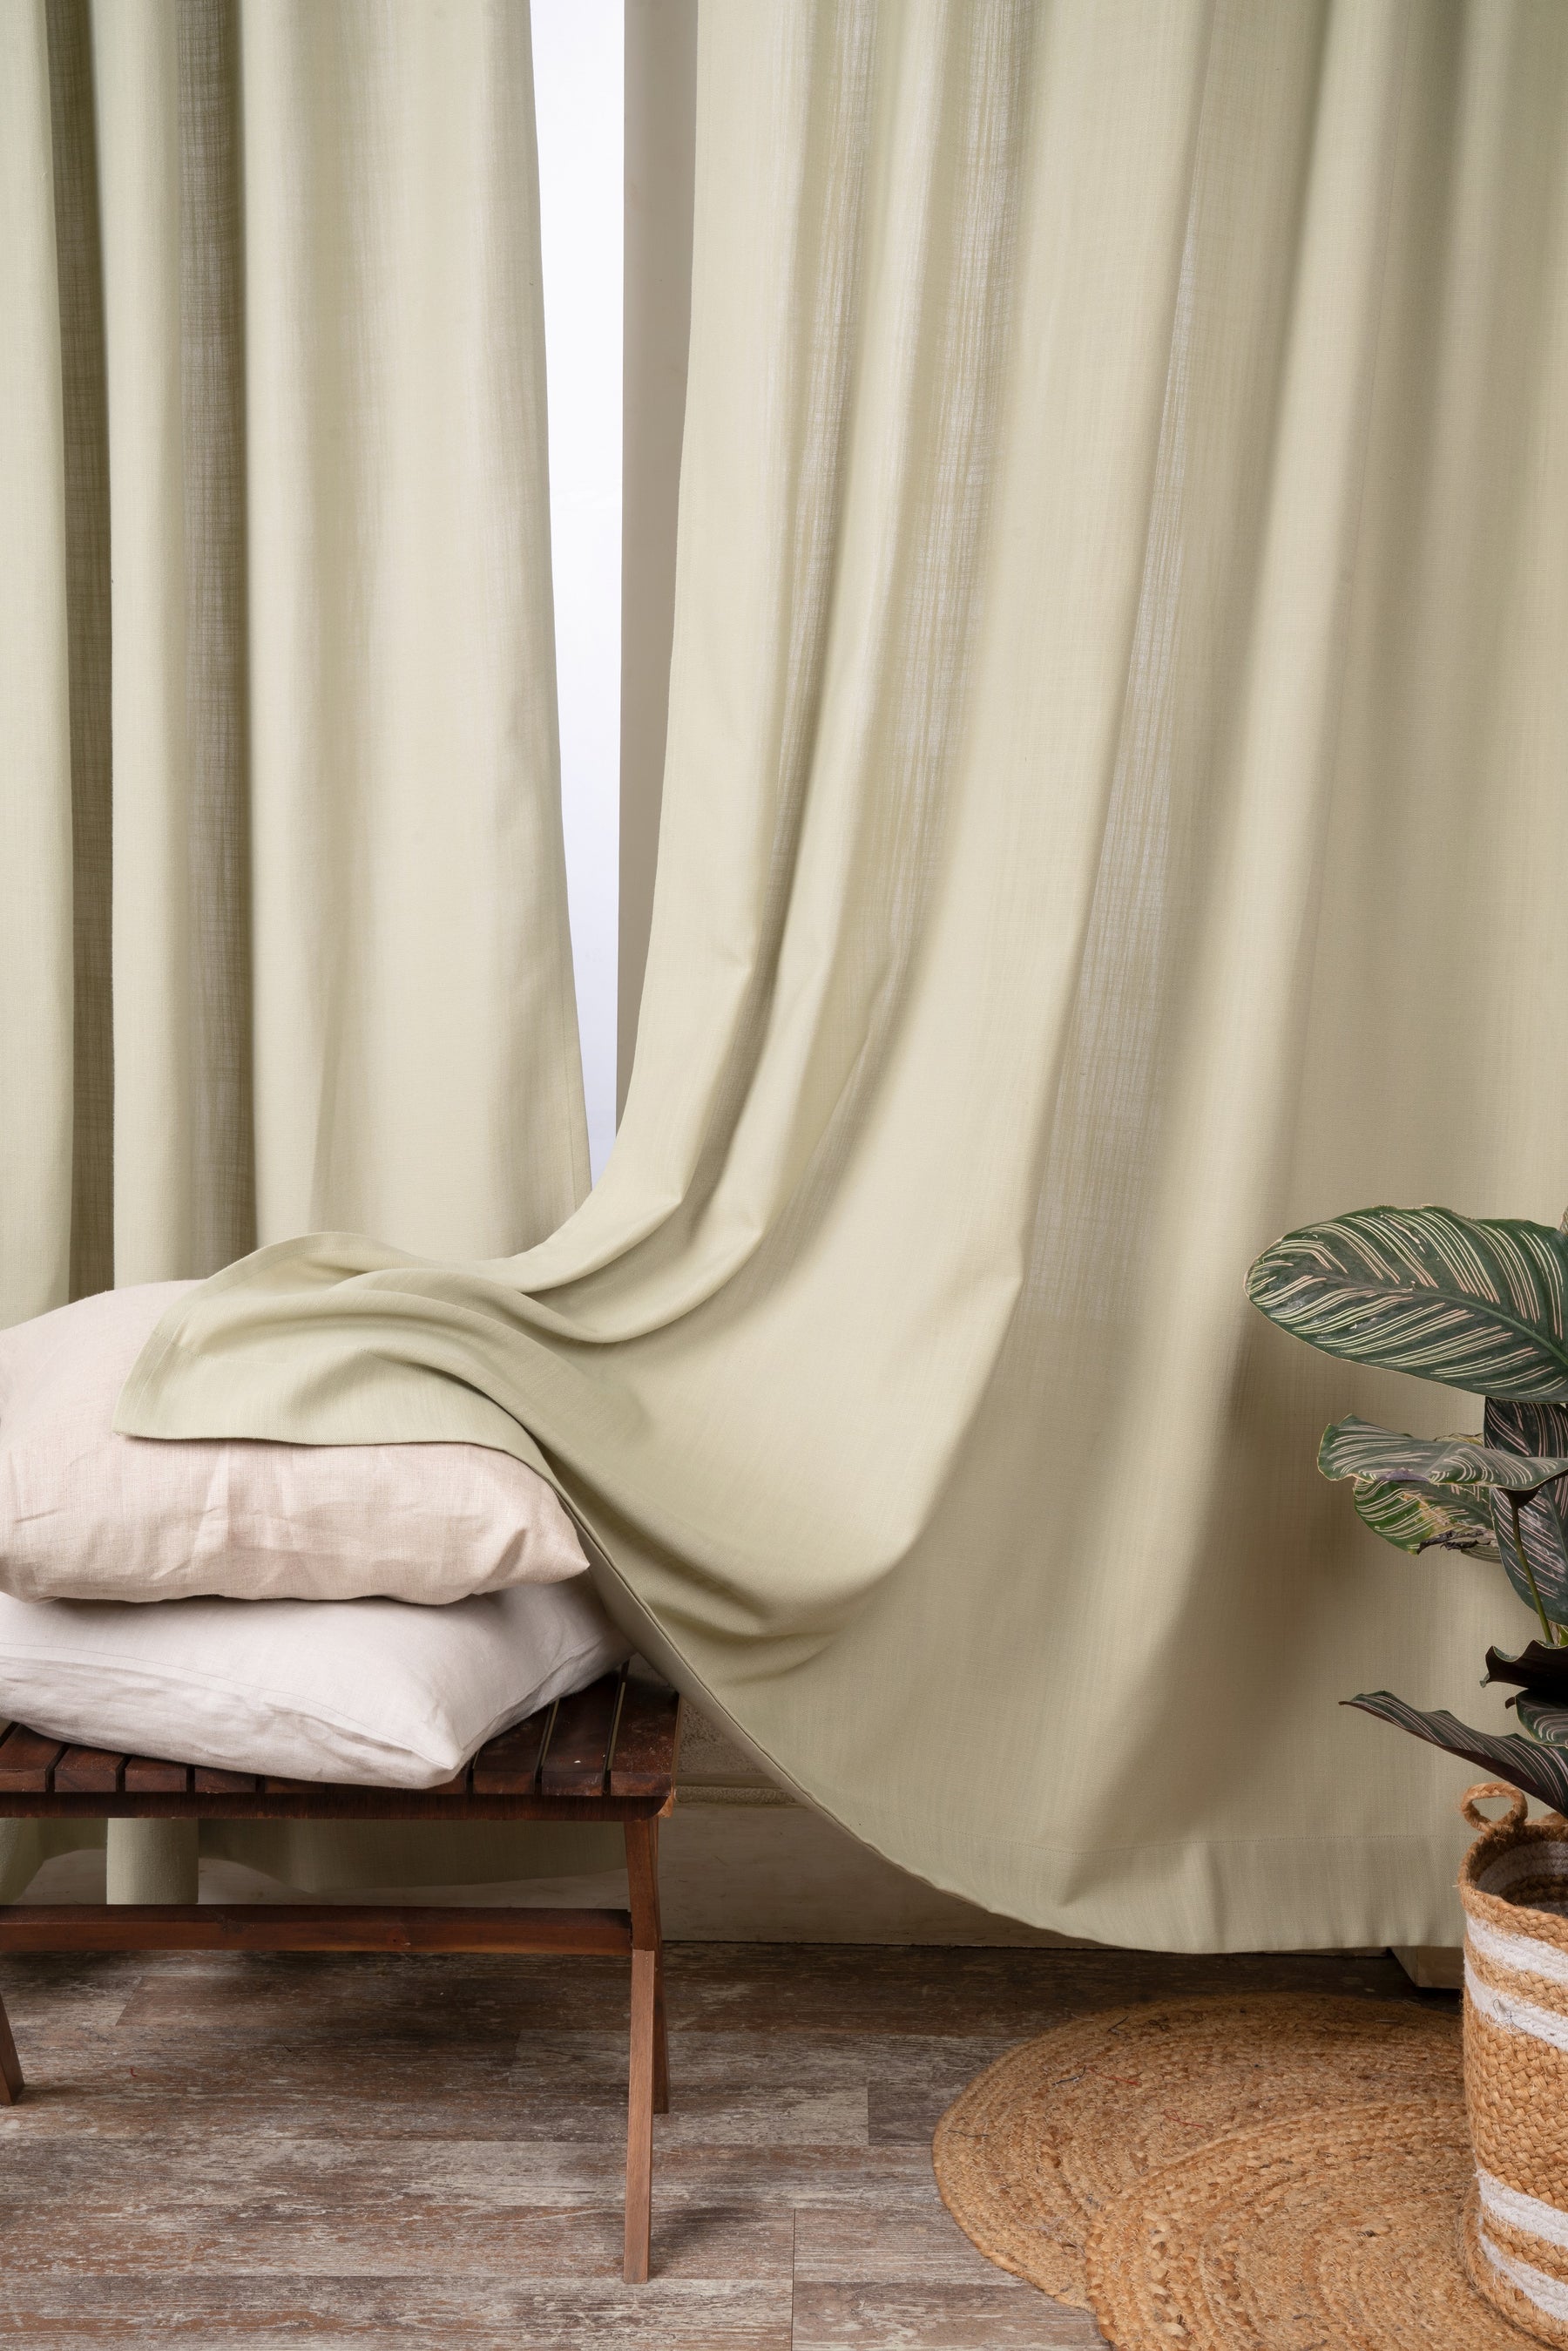 Sage Green Linen Look Frill Curtain | 1 Panel